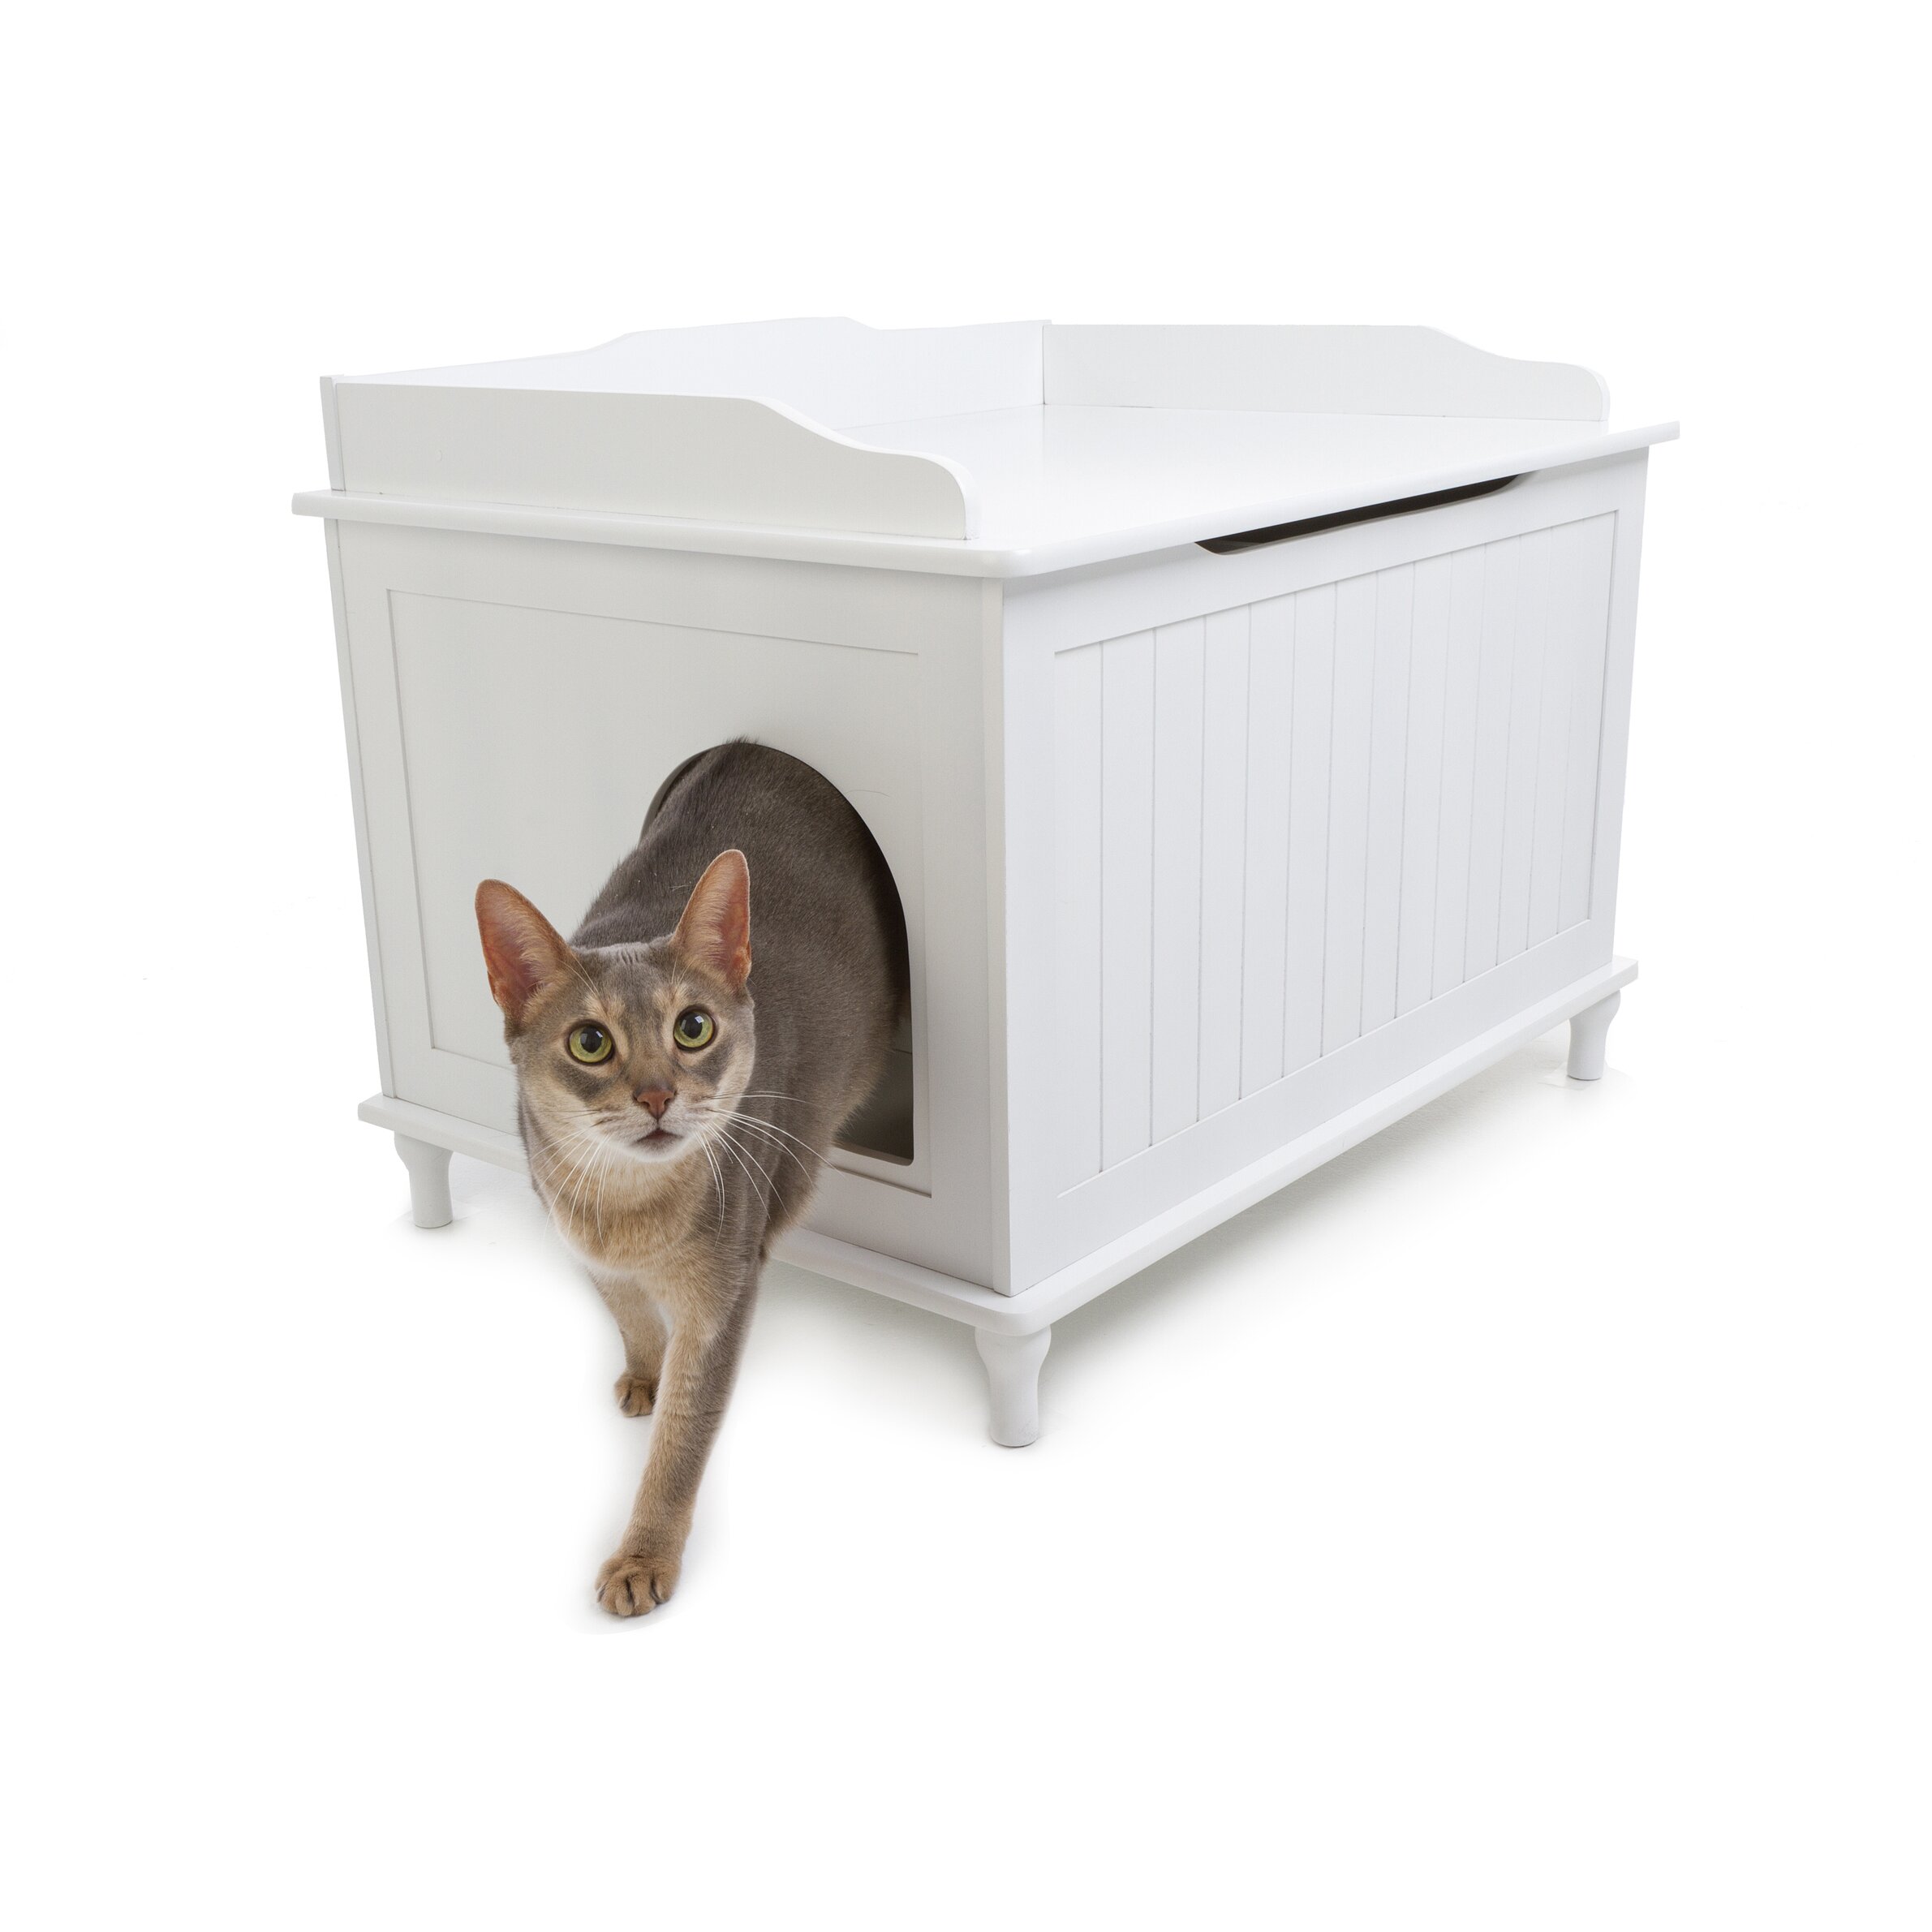 Designer Pet Products Mia Litter Box Enclosure & Reviews Wayfair